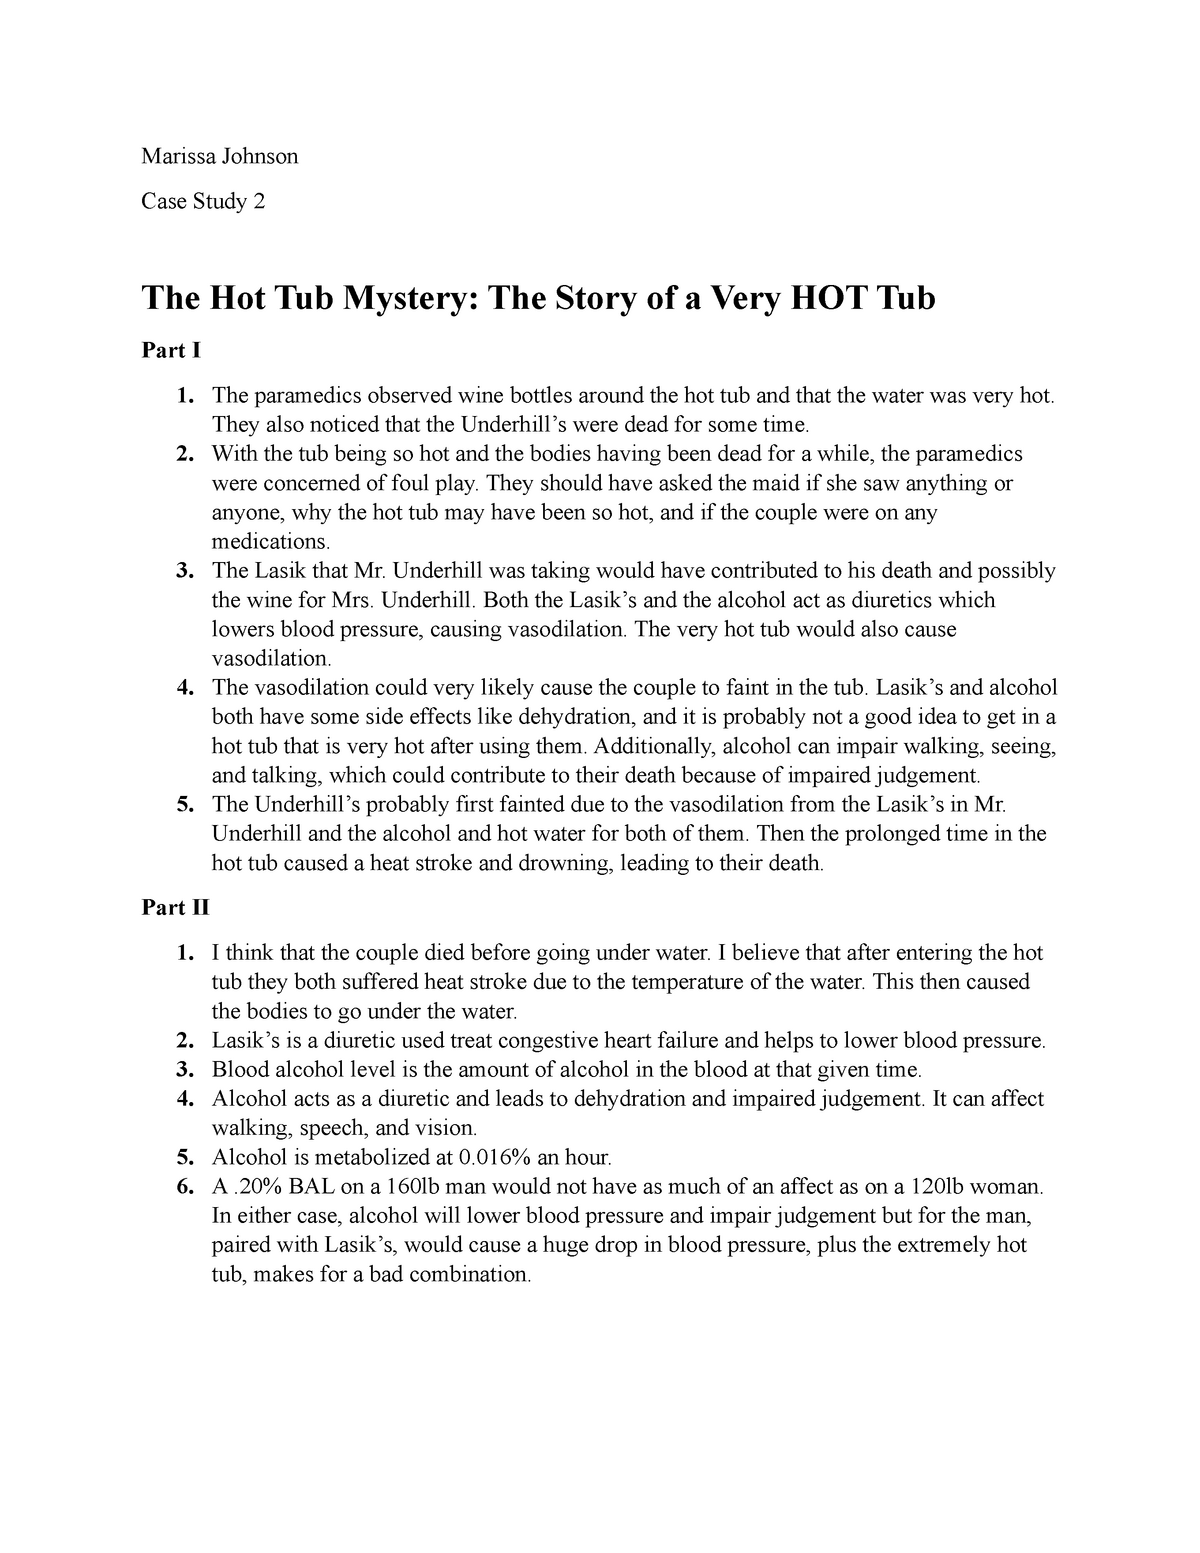 hot tub mystery case study answer key